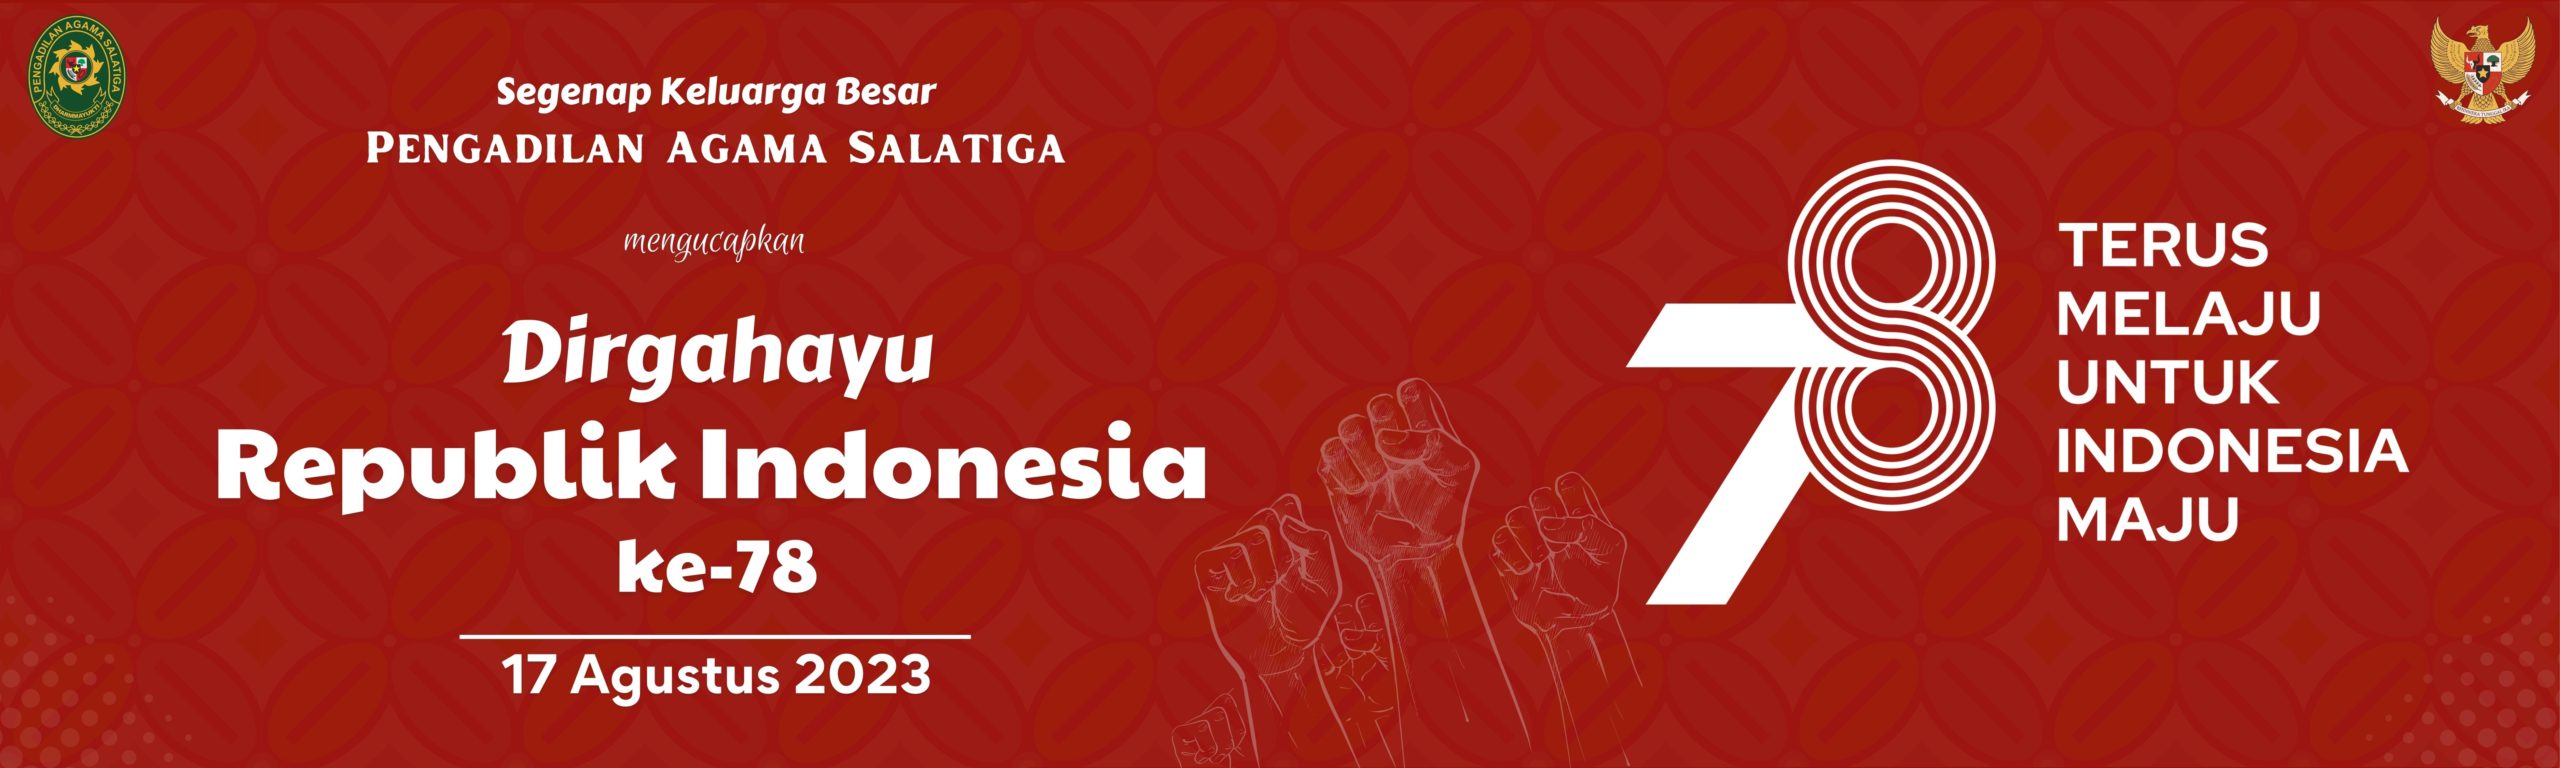 WEBSITE Dirgahayu Republik Indonesia